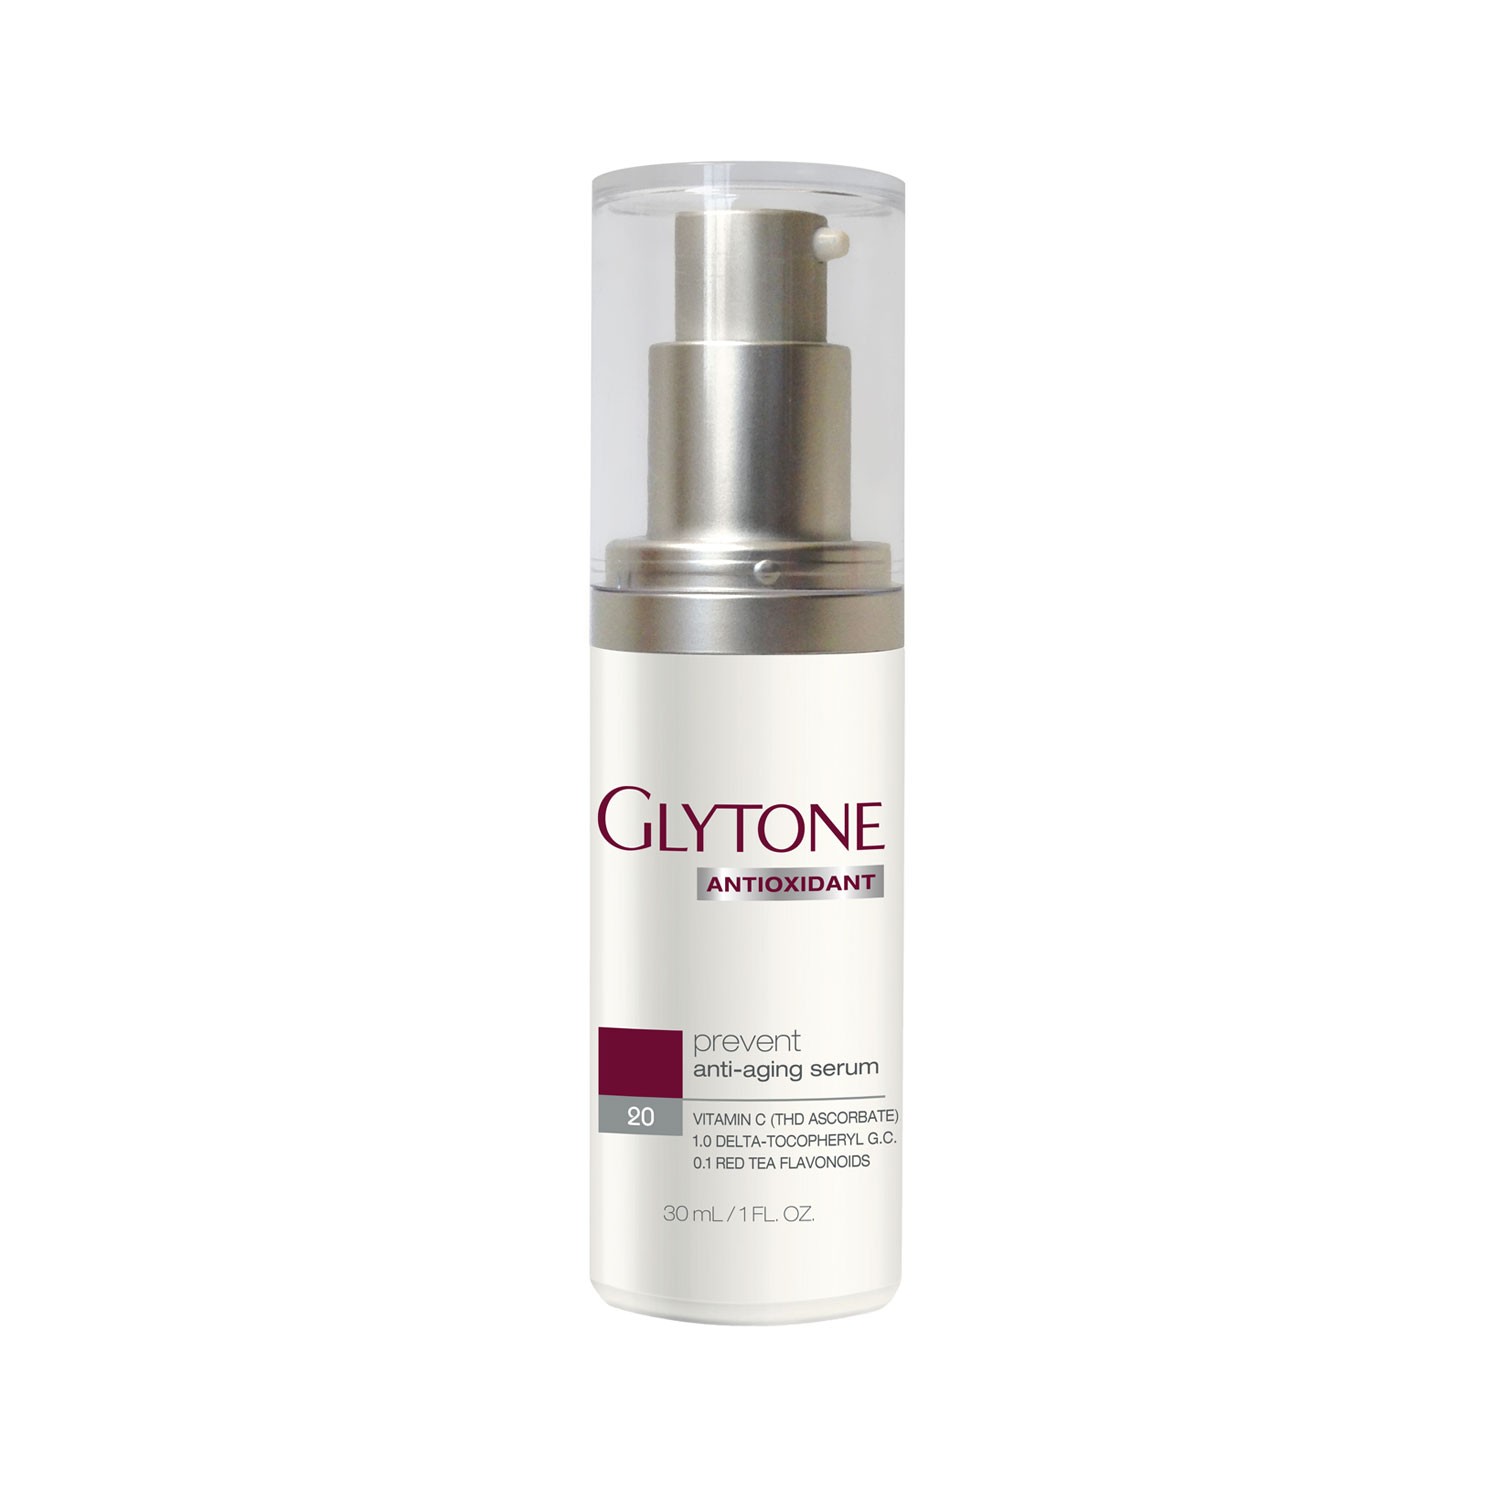 Glytone Facial Products 31